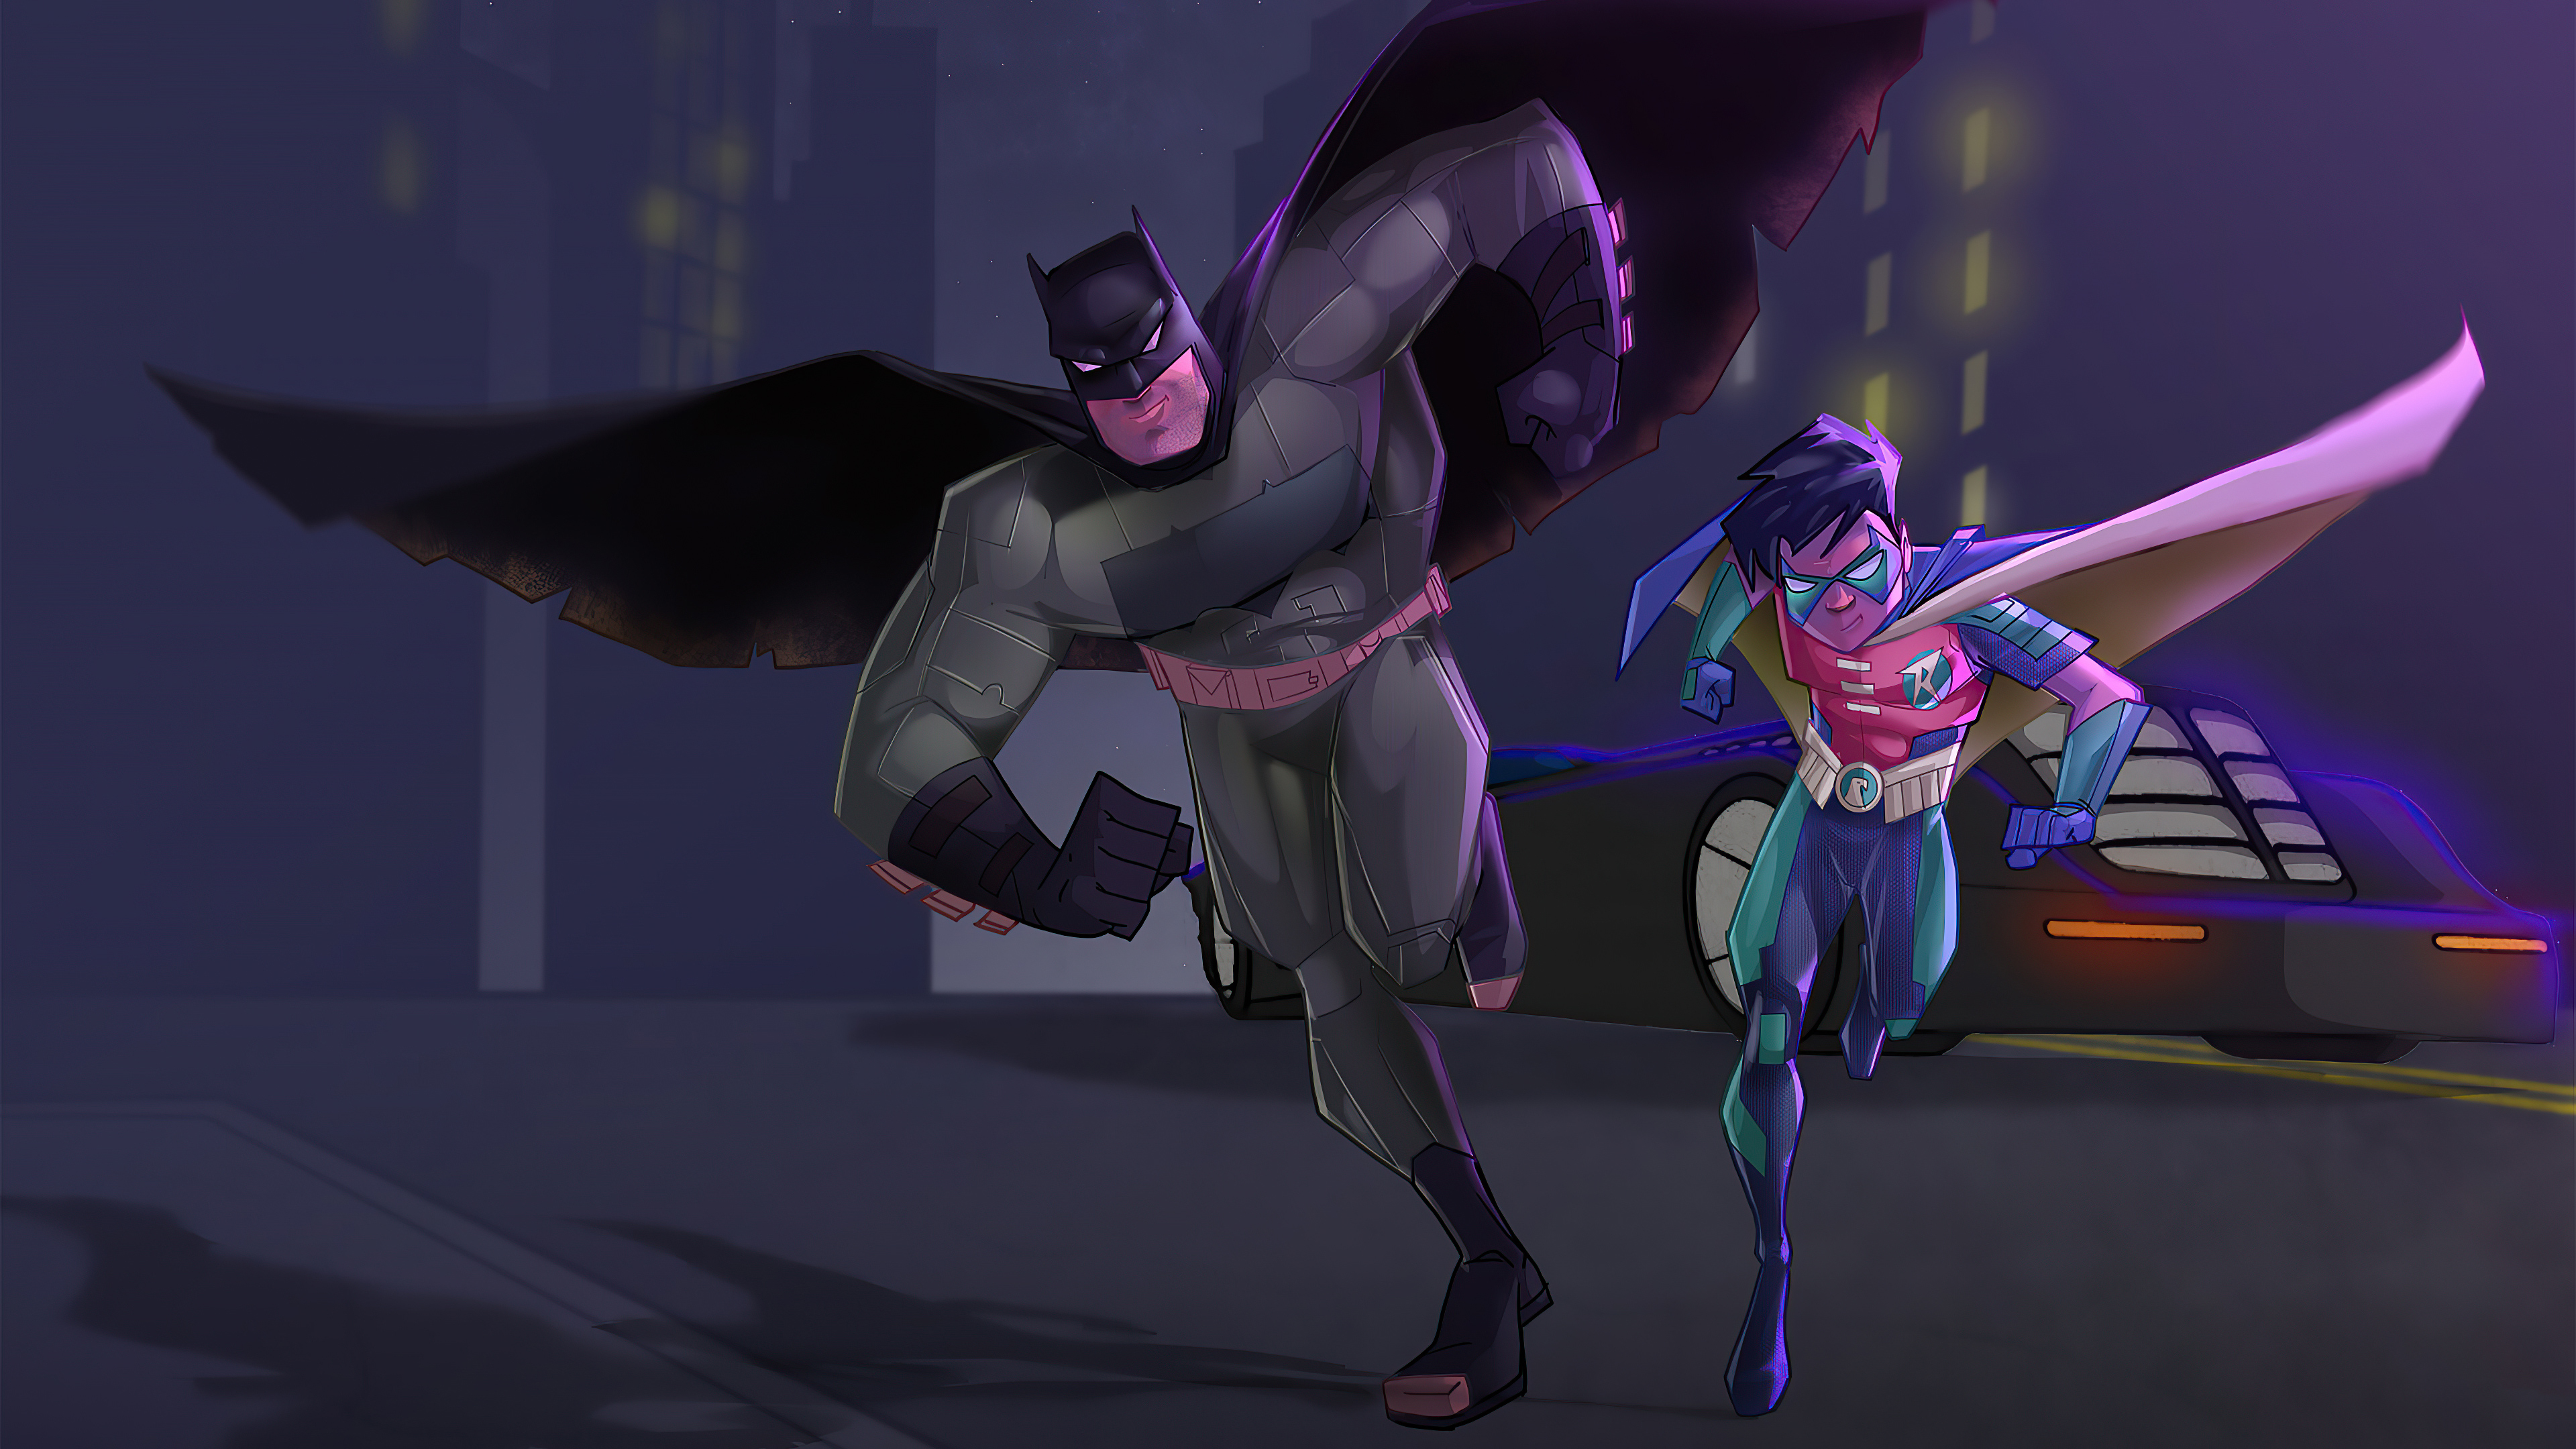 Wallpaper ID 94559  batman robin superheroes artwork artist hd 4k  free download